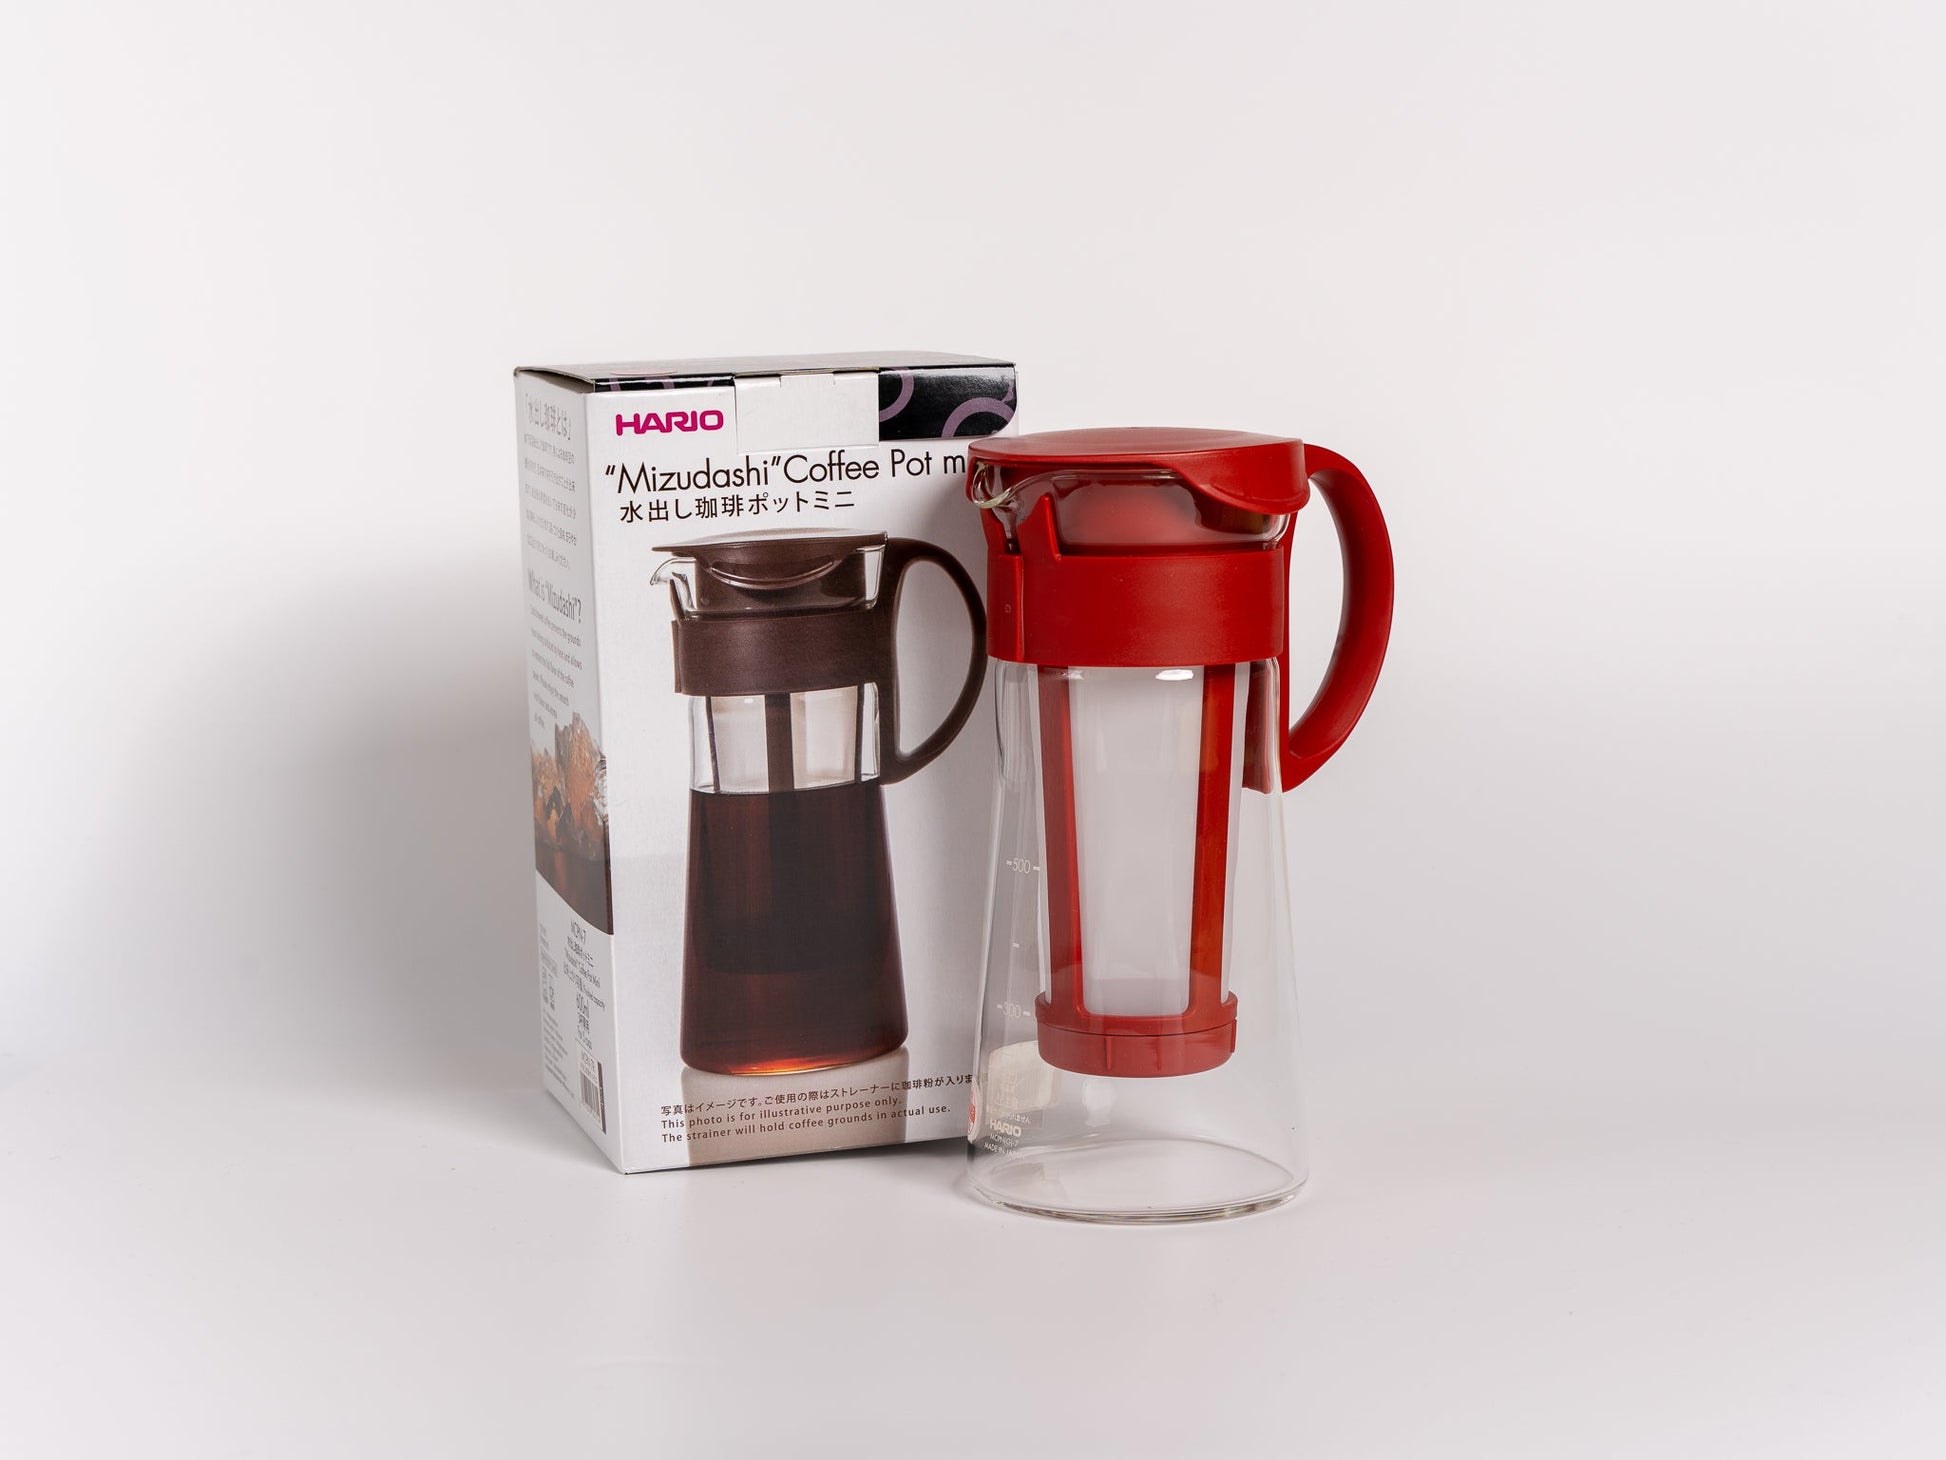 Mizudashi (Cold Brew) Coffee Maker – Hario USA